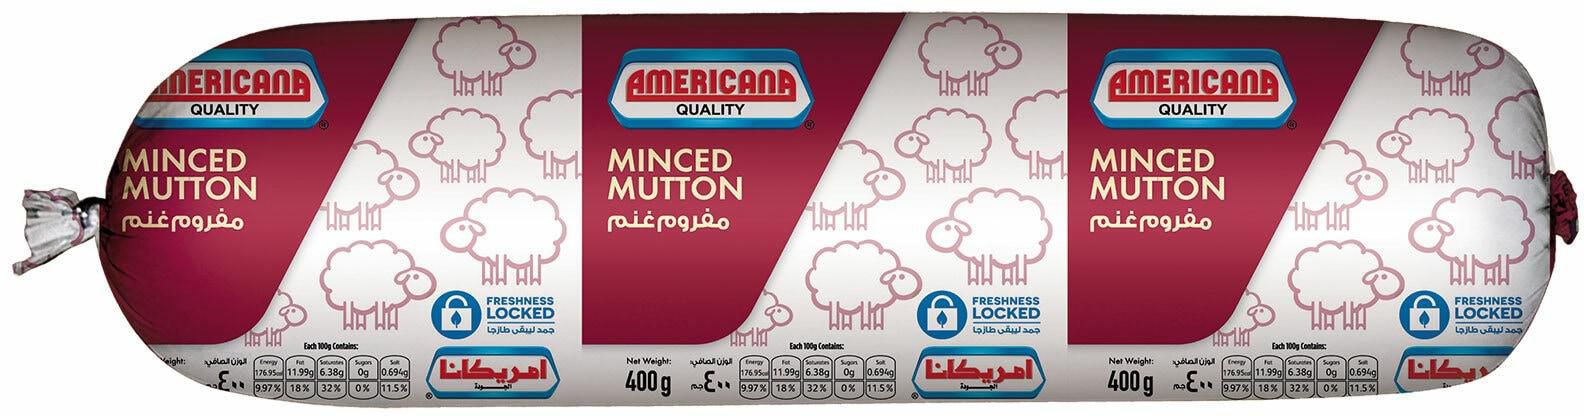 Americana minced mutton 400 g